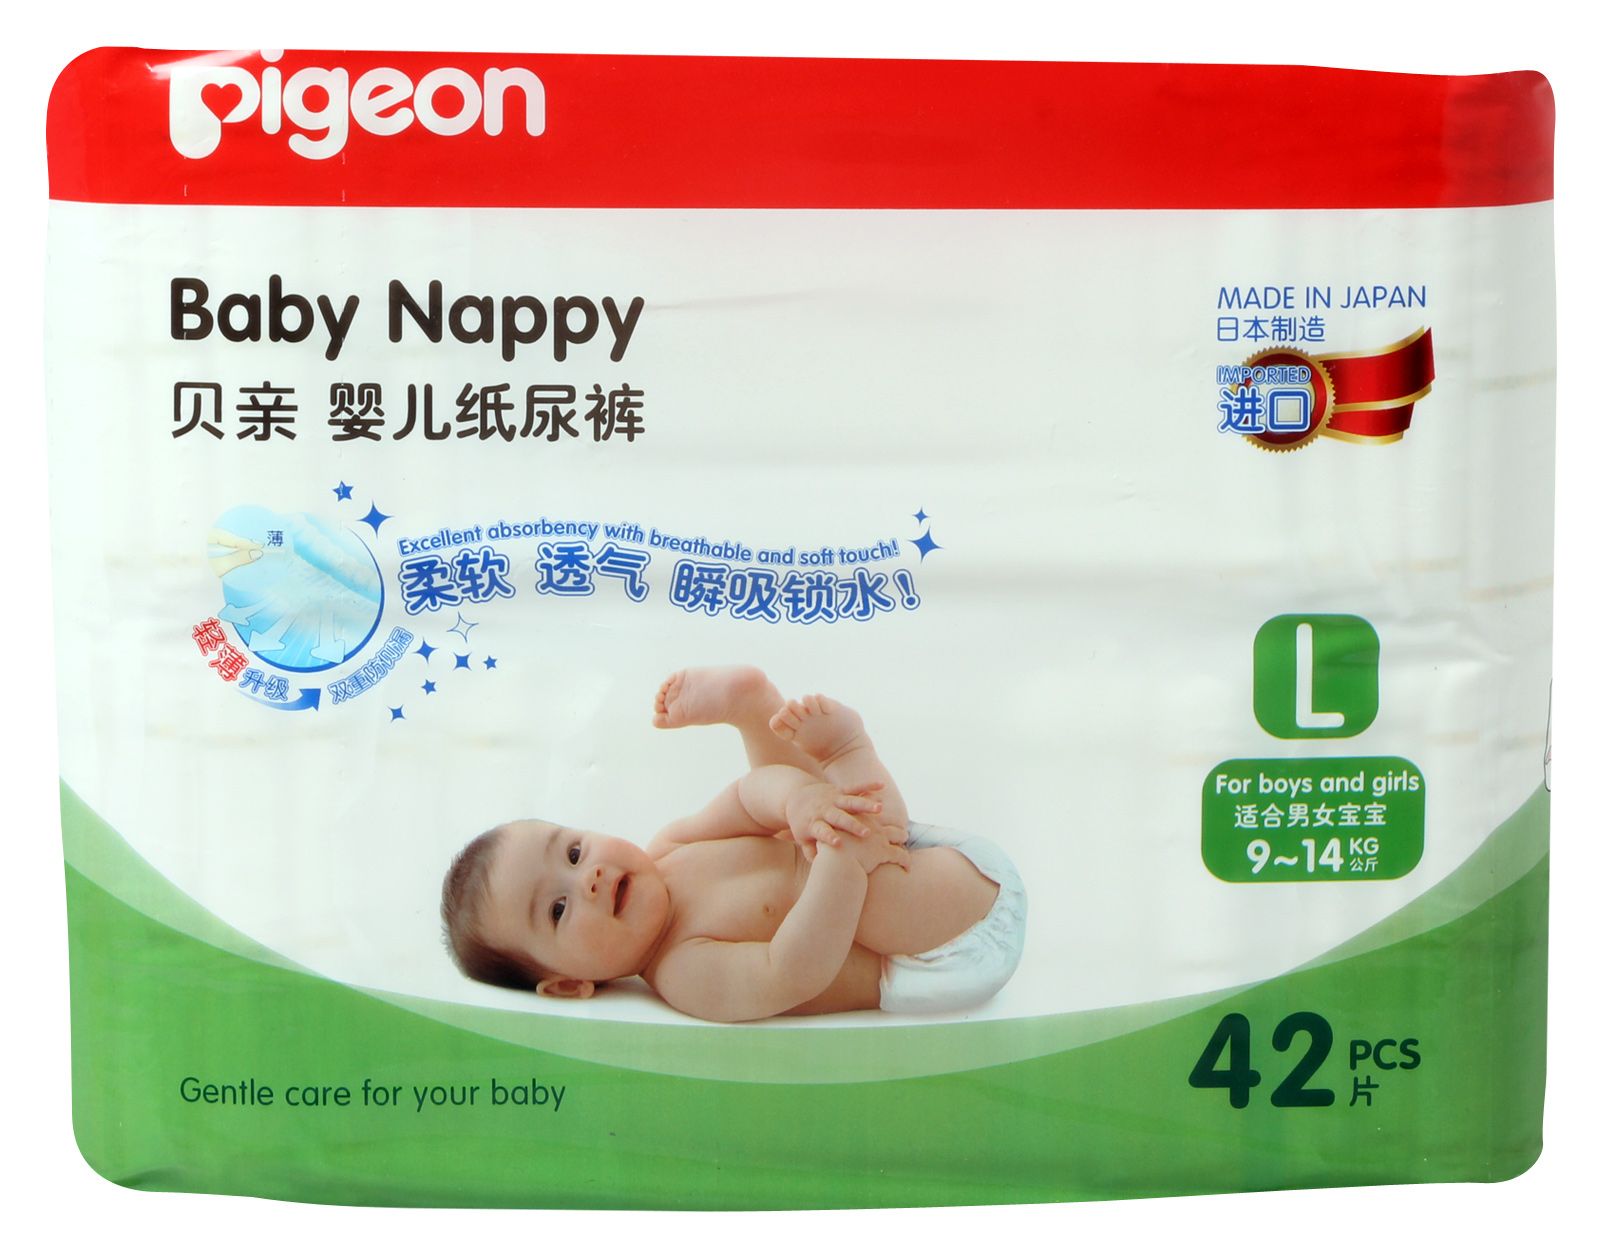 Pigeon - Baby Nappy Diaper